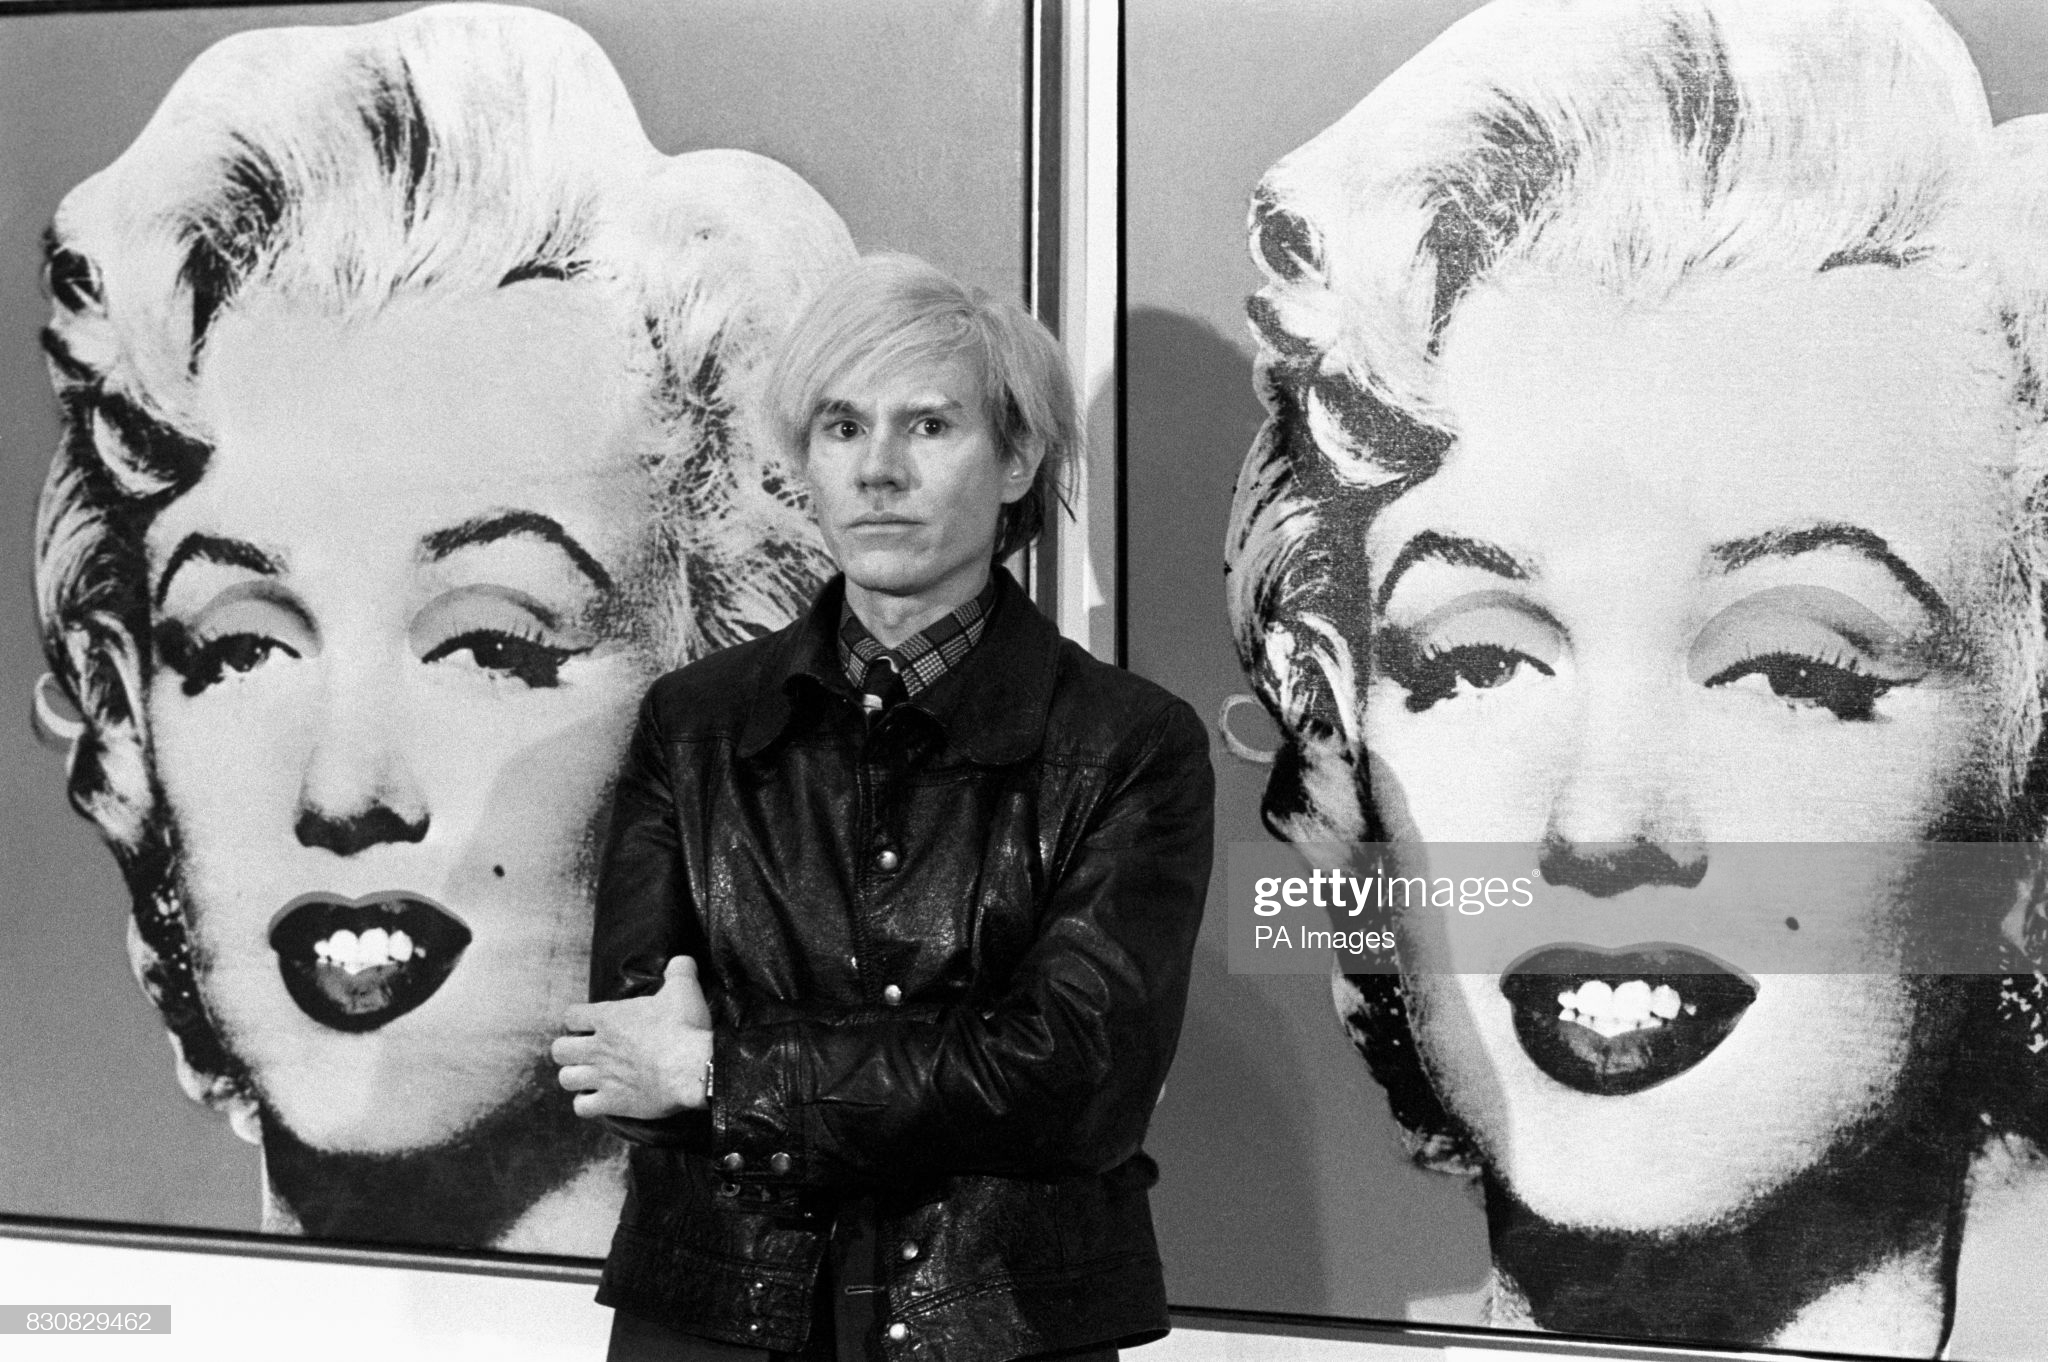 Nederigheid leerplan Christian The King of Pop Art: Andy Warhol - MozartCultures